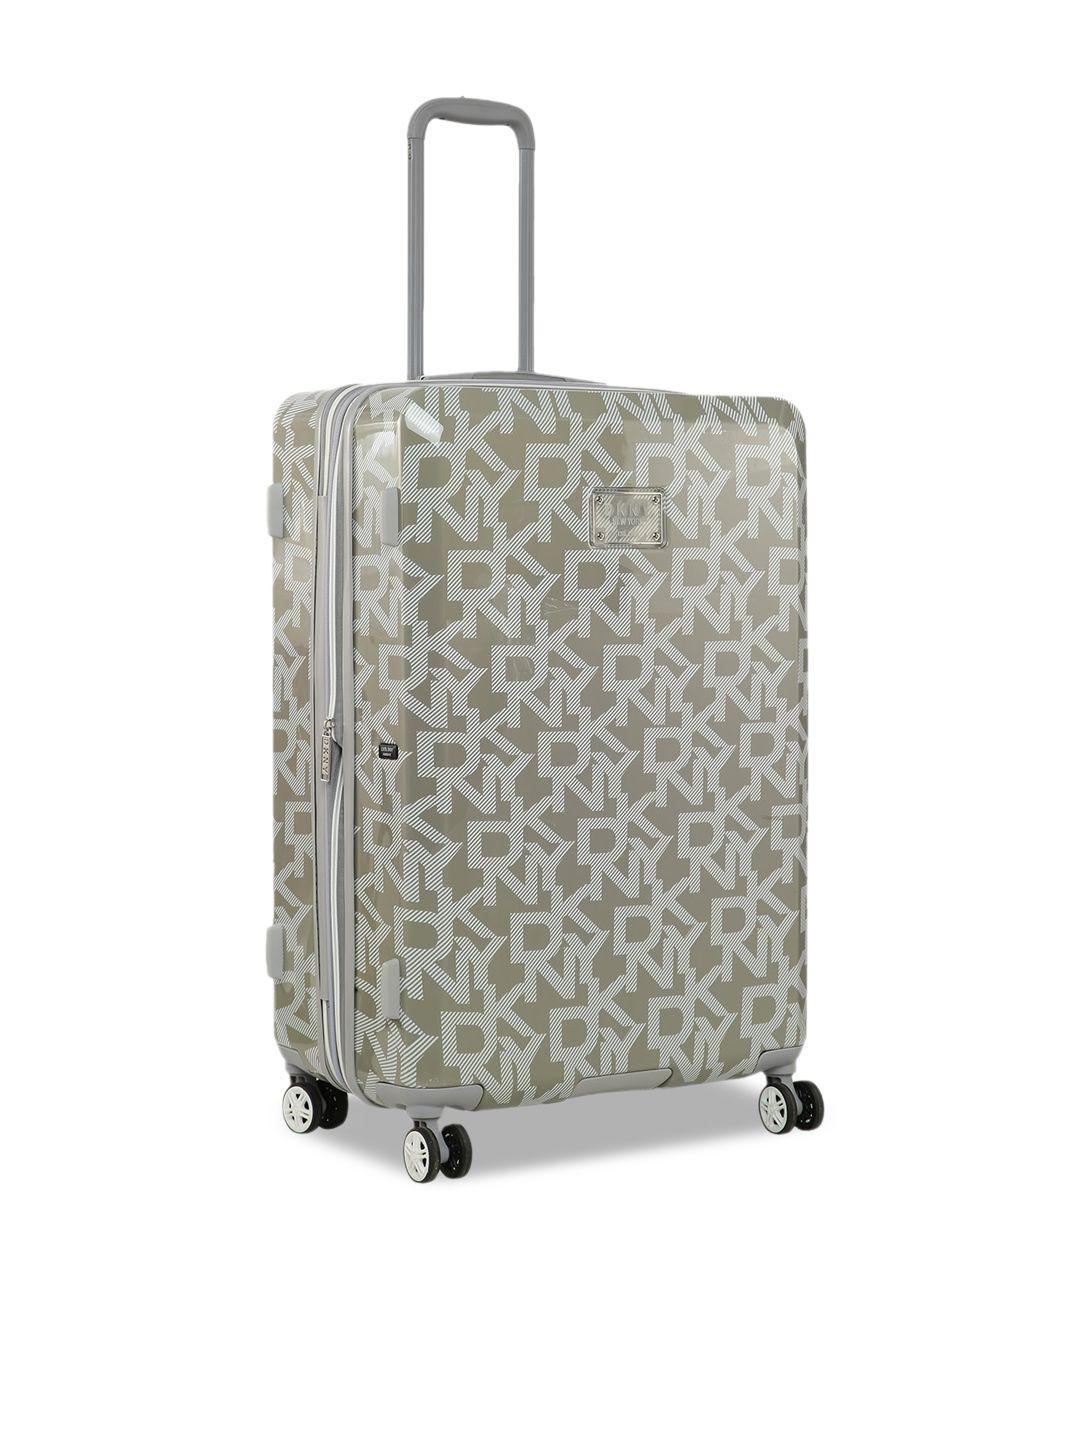 dkny grey & white printed hard-sided medium trolley suitcase